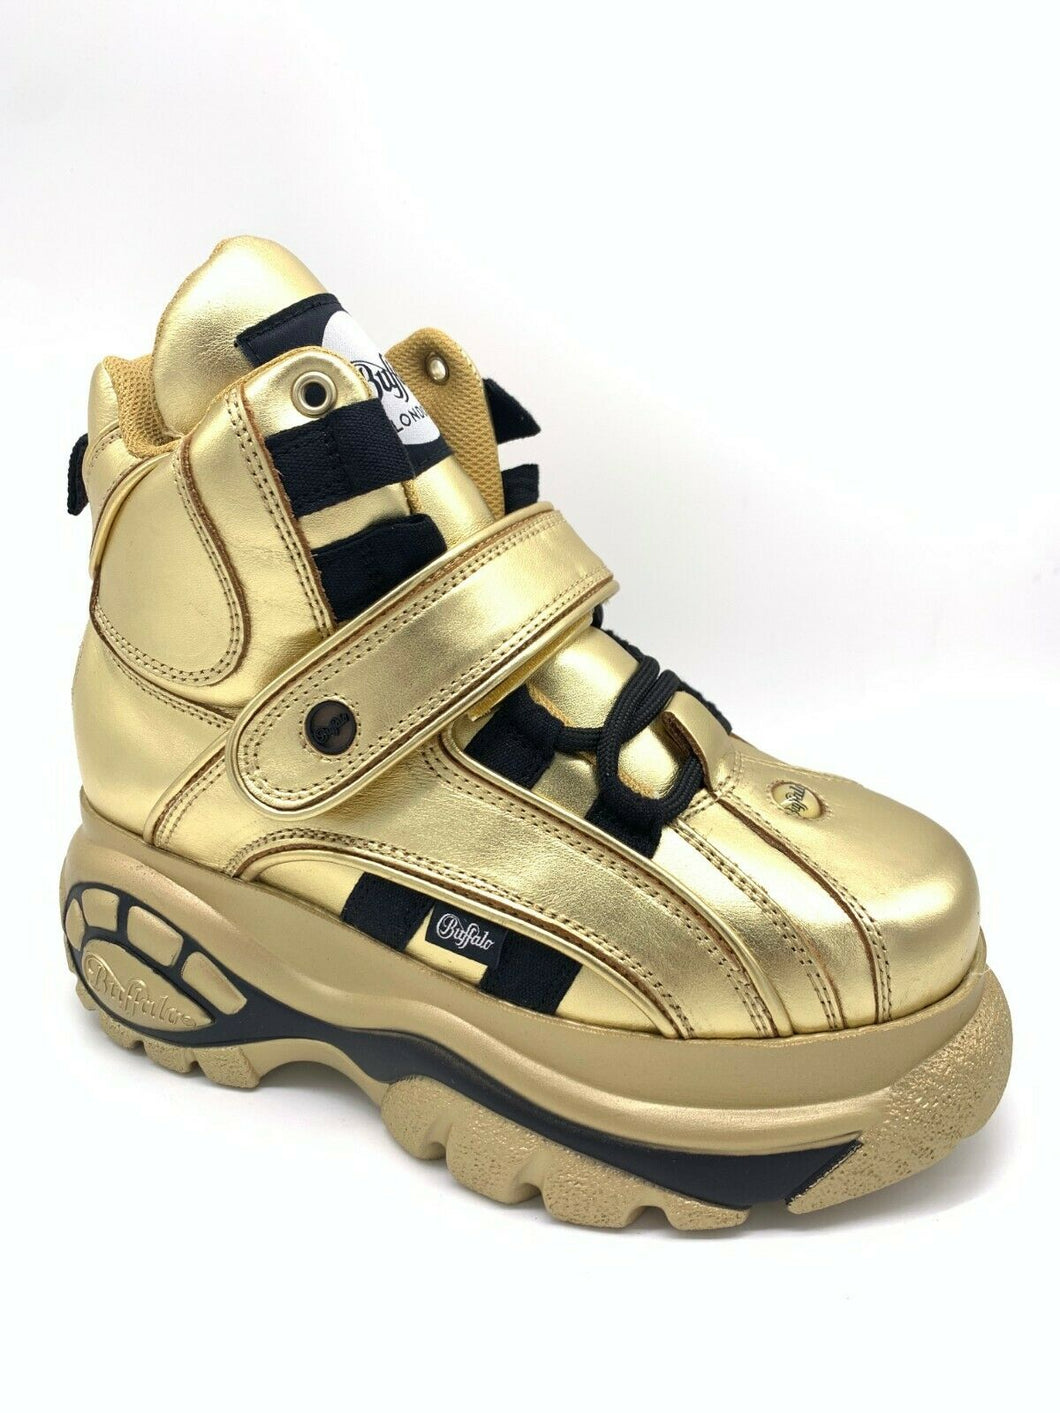 Buffalo London Classic Boots Plateau Schuhe 90er Nappa Leder Gold Shoes 1348-14